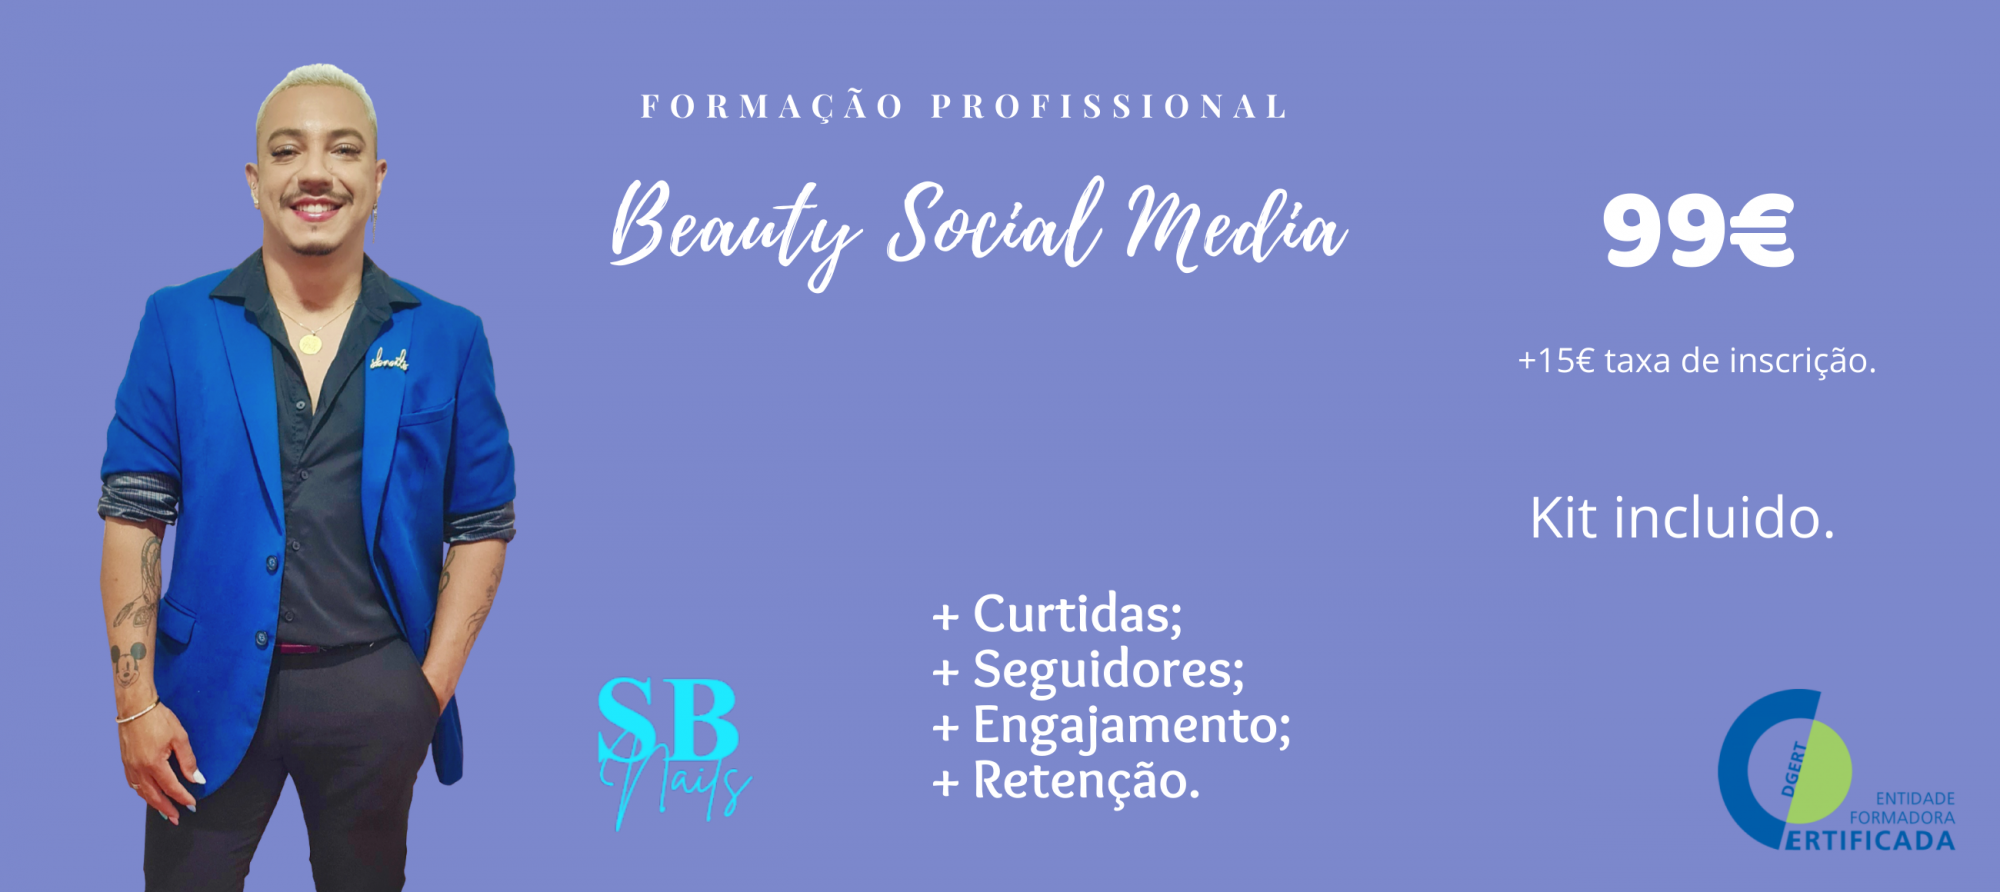 Beauty Social Media